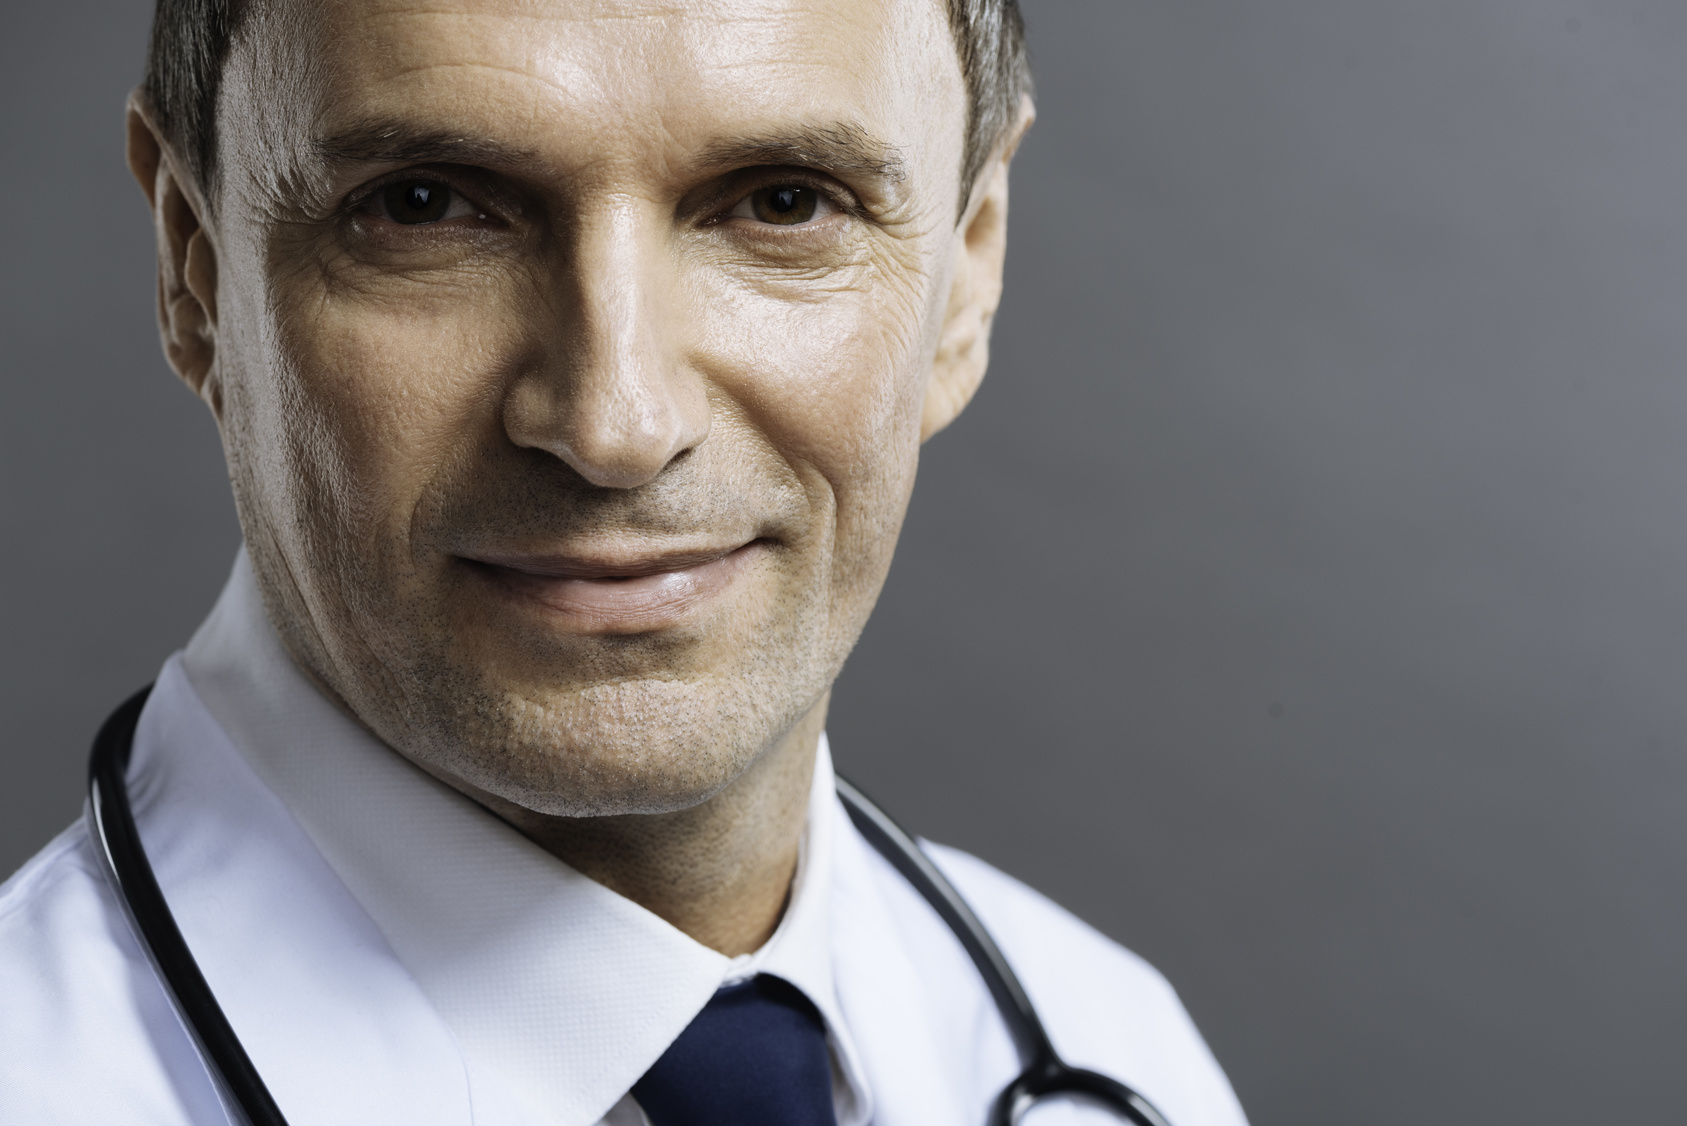 Portrait of handsome doctor smiling on a grey background